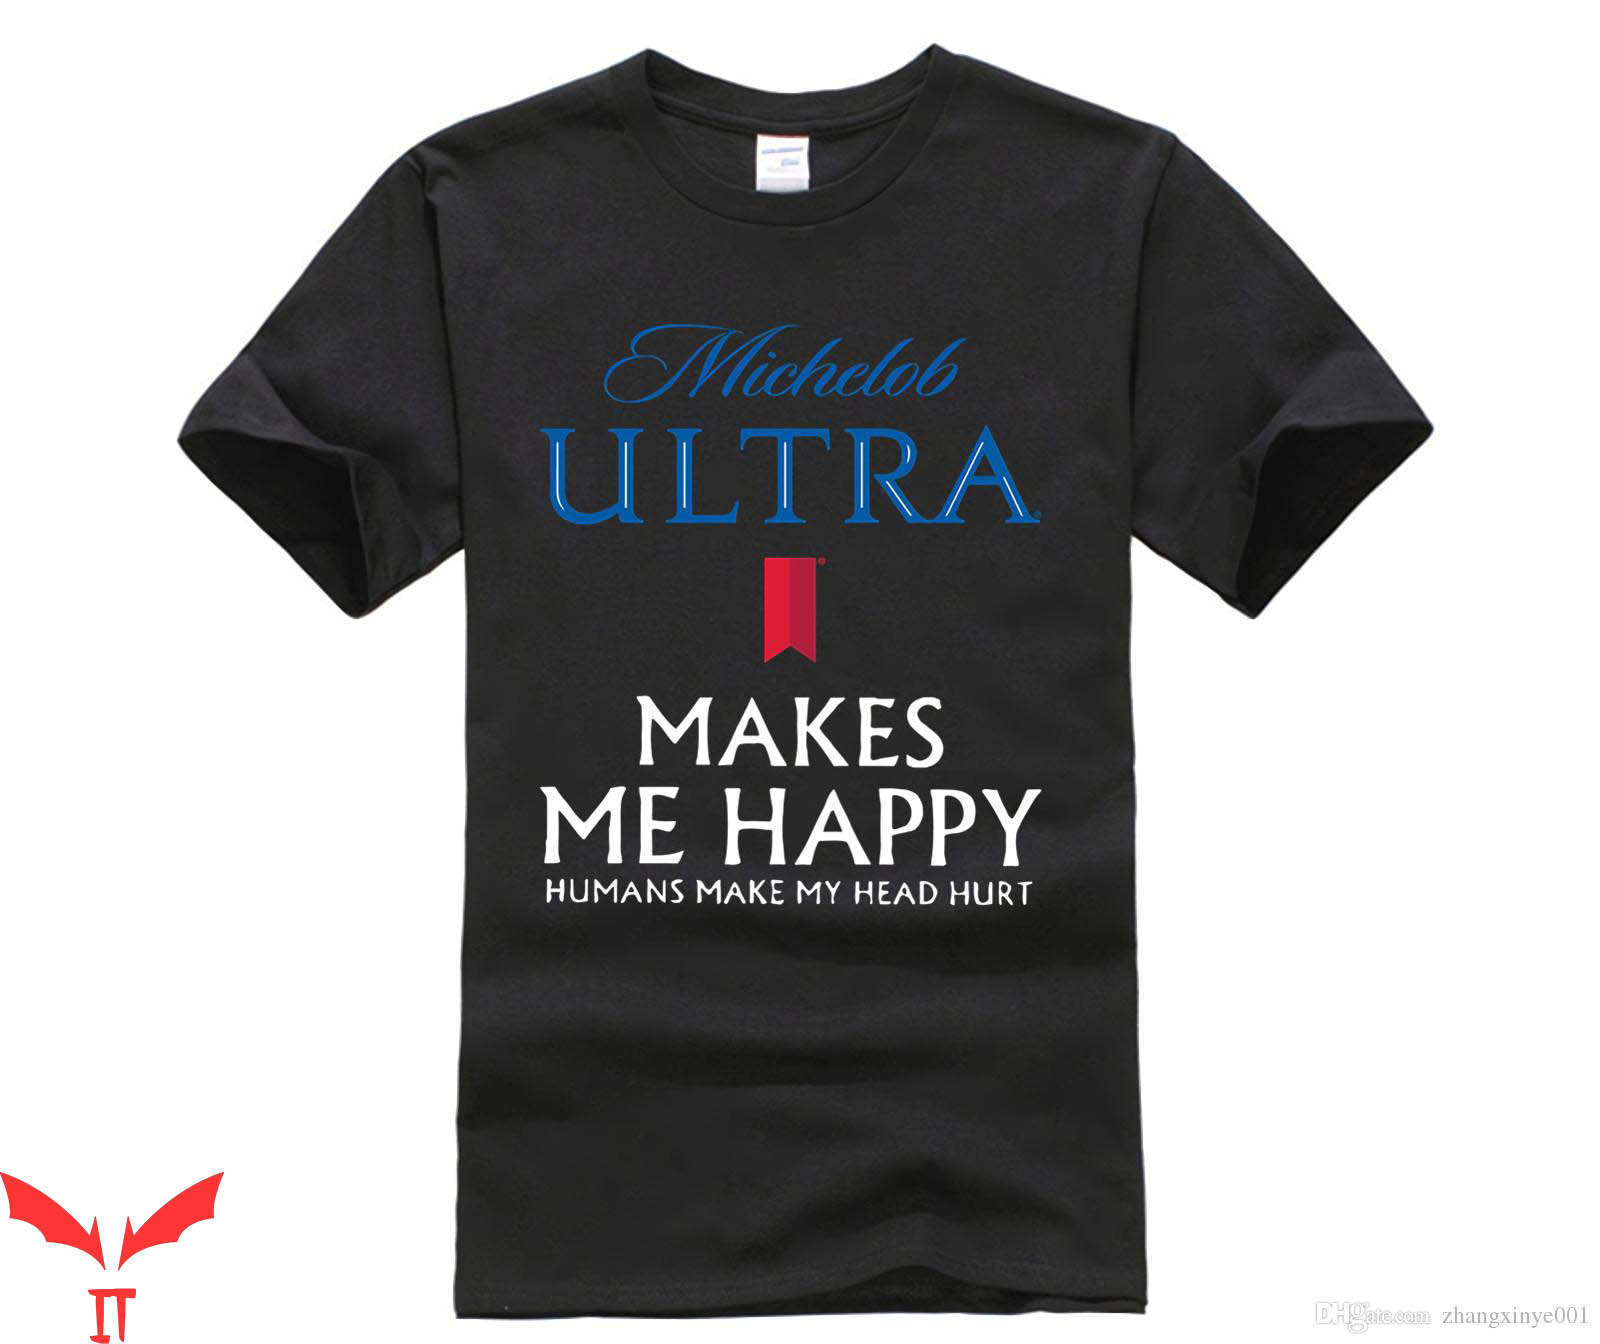 Michelob Ultra T-Shirt Makes Me Happy Humans Make My Head